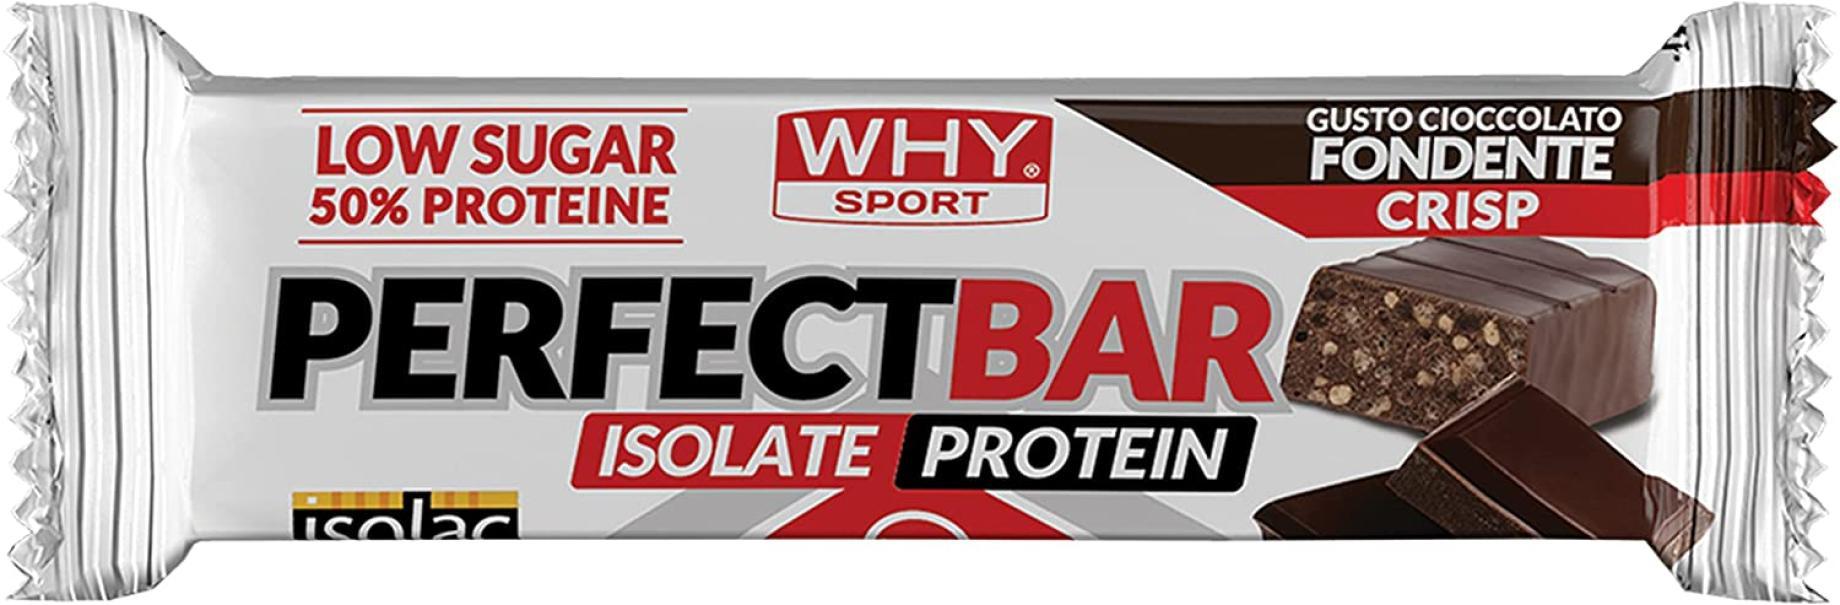 why sport why sport perfect bar - 28 barrette proteiche con proteine isolate - snack proteici - gusto caramello crisp - 50 gr